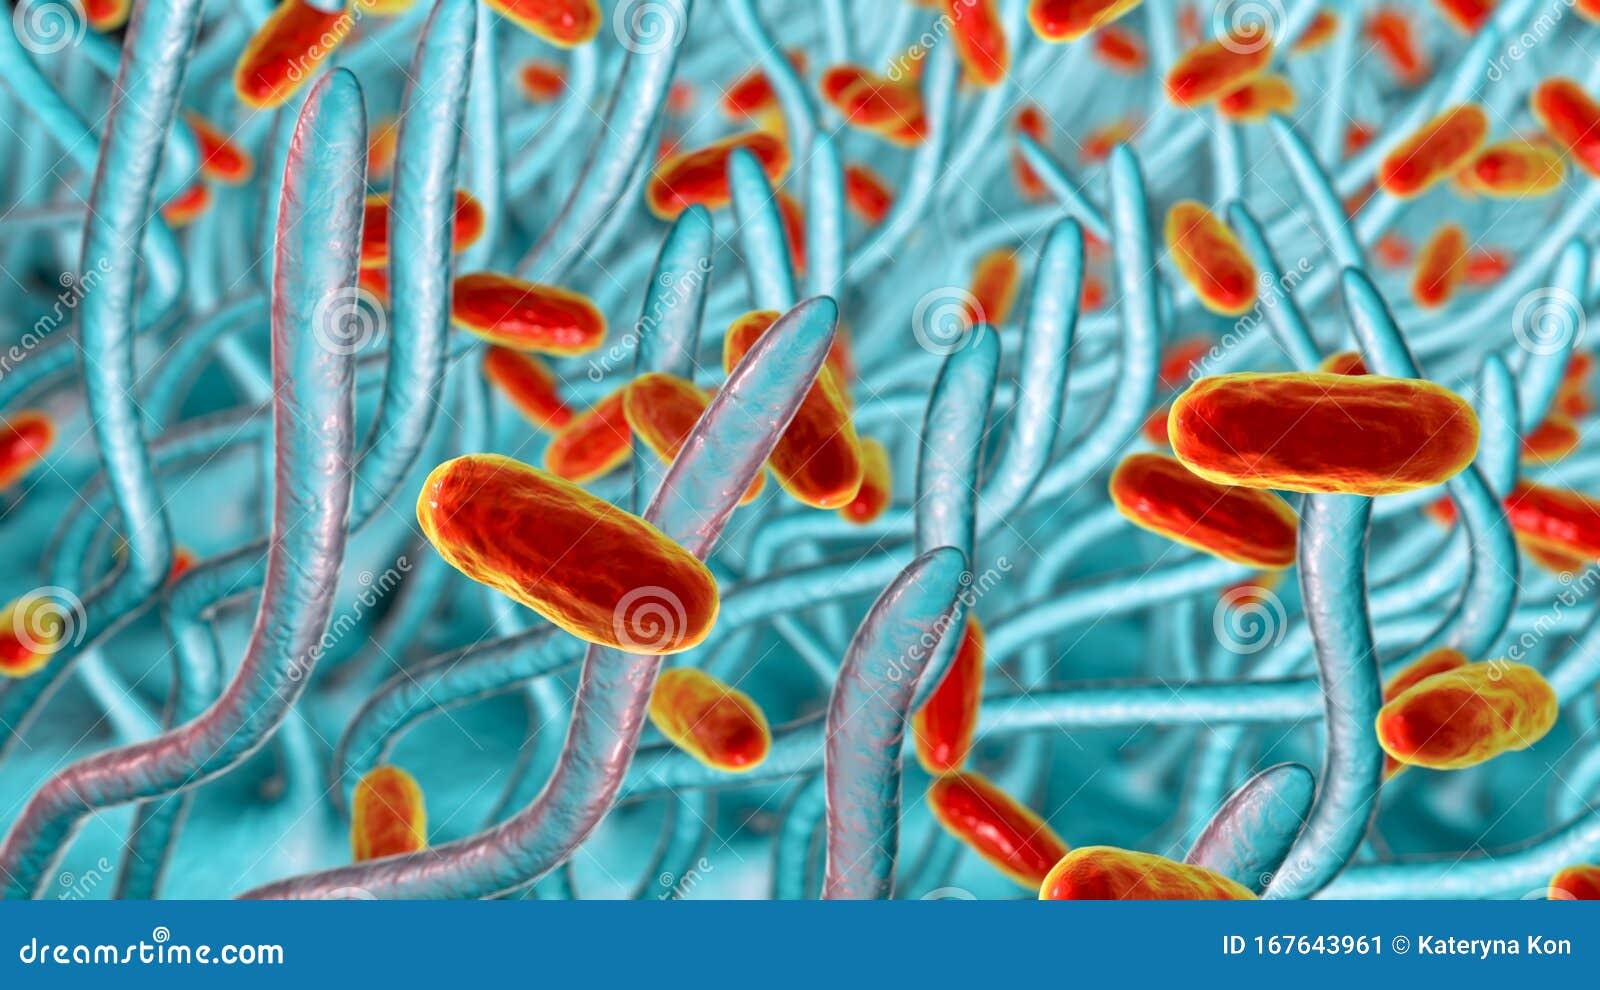 Whooping Cough Bacteria Bordetella Pertussis in Human Airways Stock